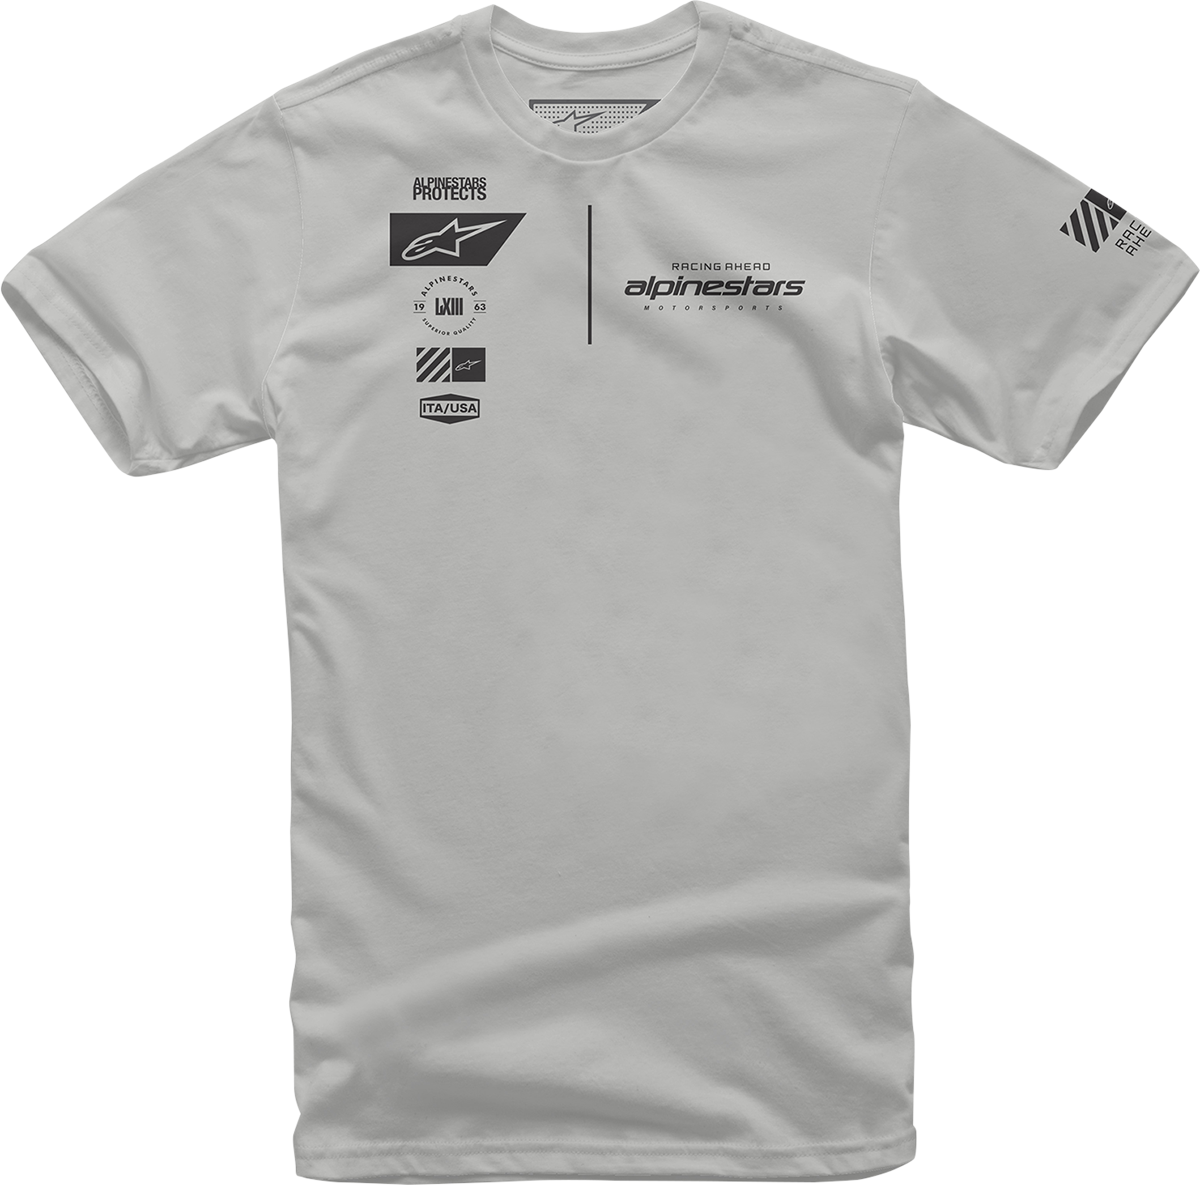 ALPINESTARS Position T-Shirt - Silver - Large 1212-7203419-L